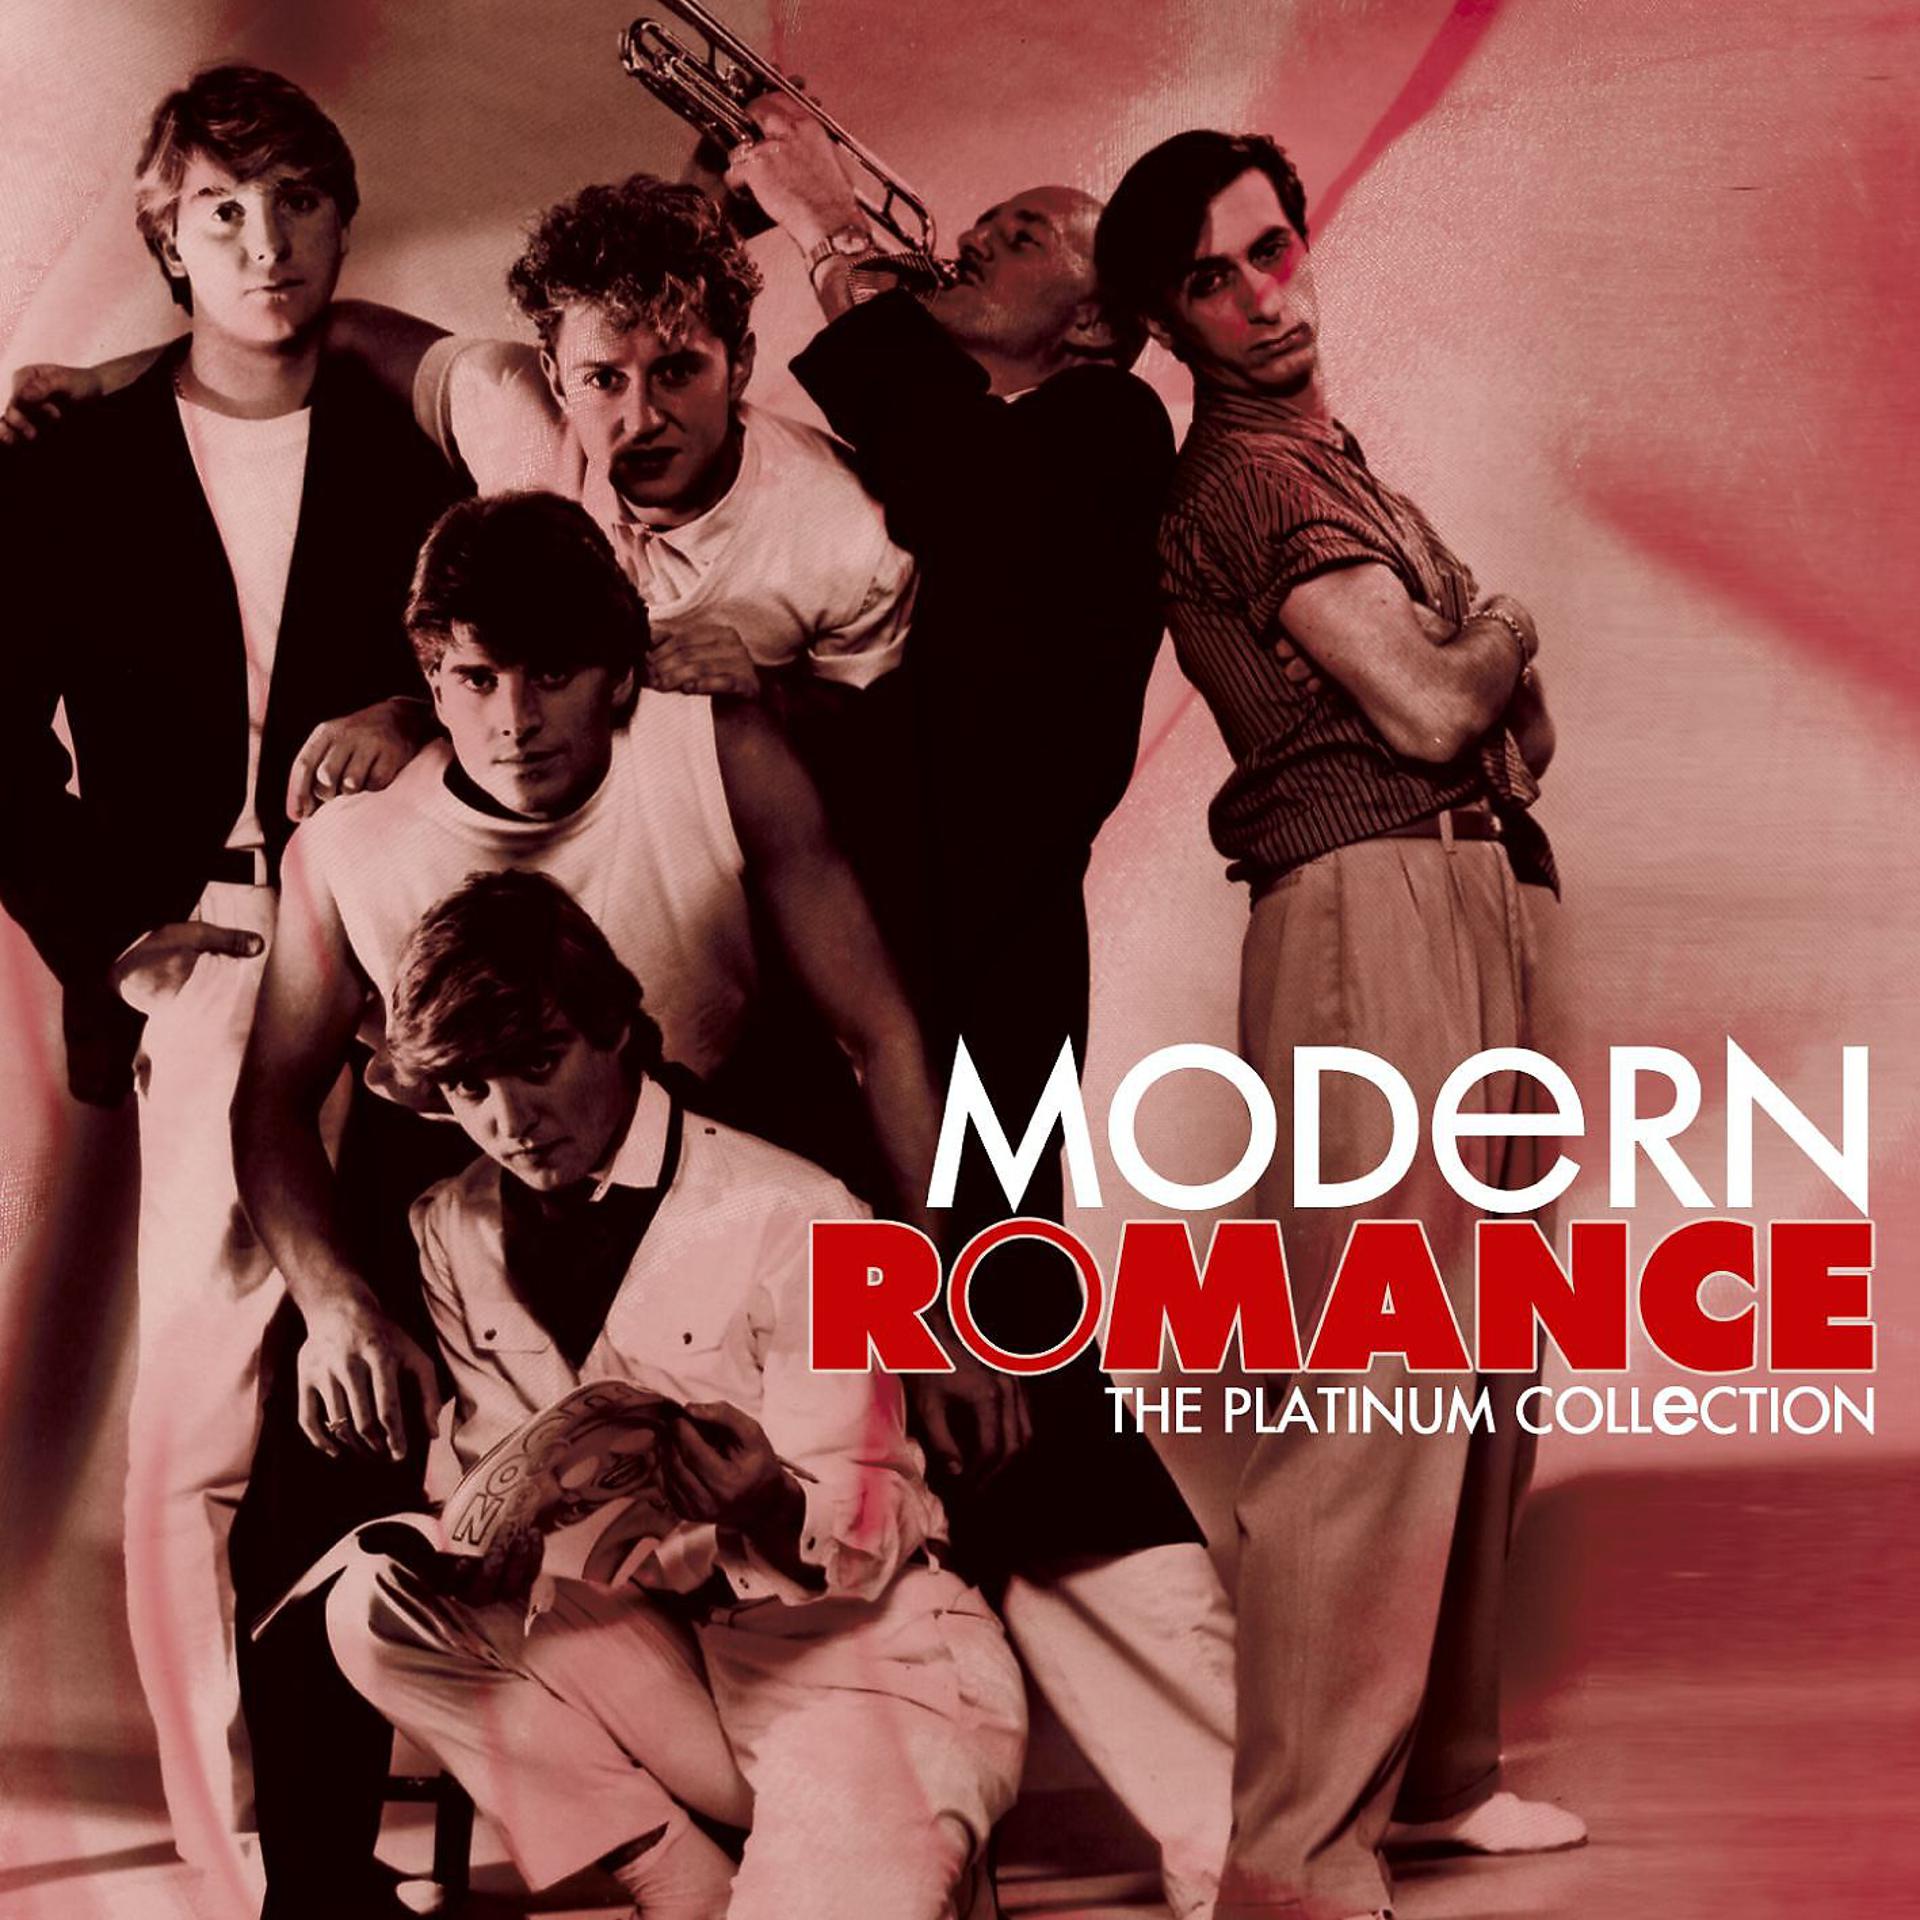 Modern Romance. Modern Romance группа. Modern Romance best years of our Lives. Platinum. High romance